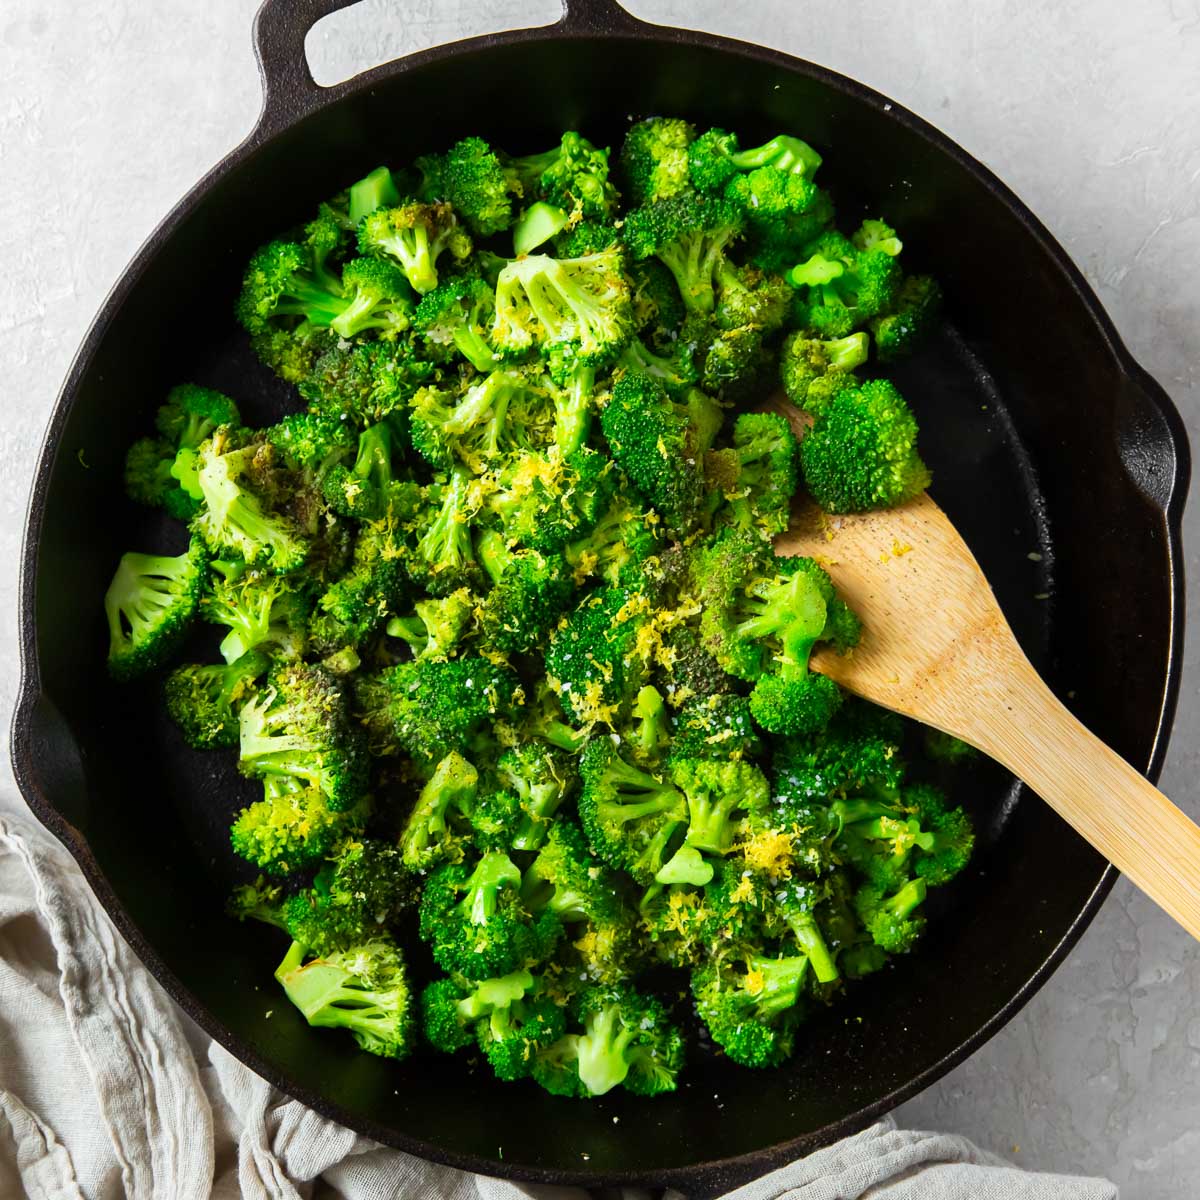 https://kristineskitchenblog.com/wp-content/uploads/2022/03/best-sauteed-broccoli-recipe-476.jpg